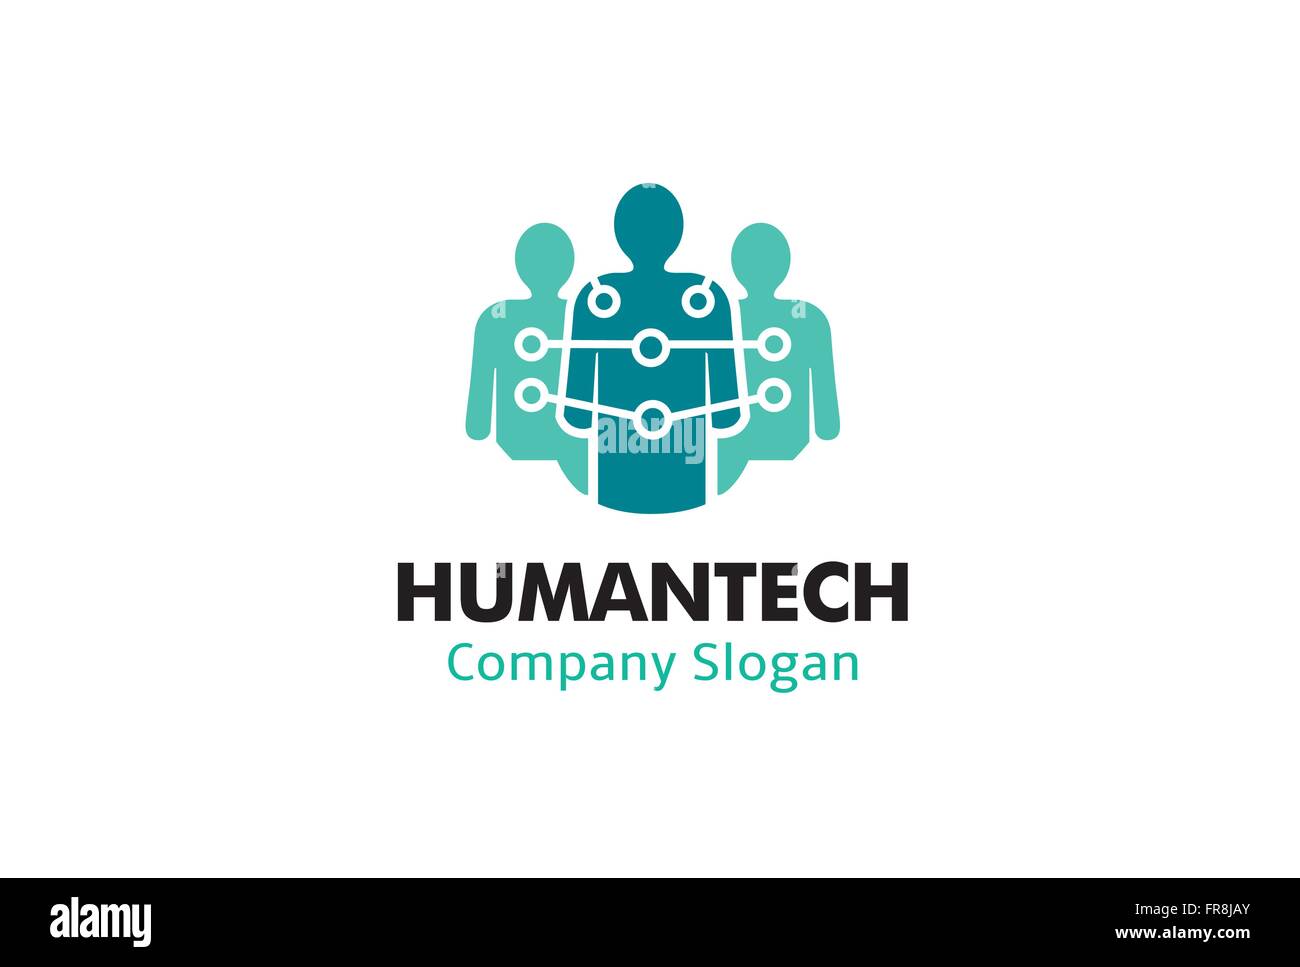 Human Tech Design Illustration Stock Vector